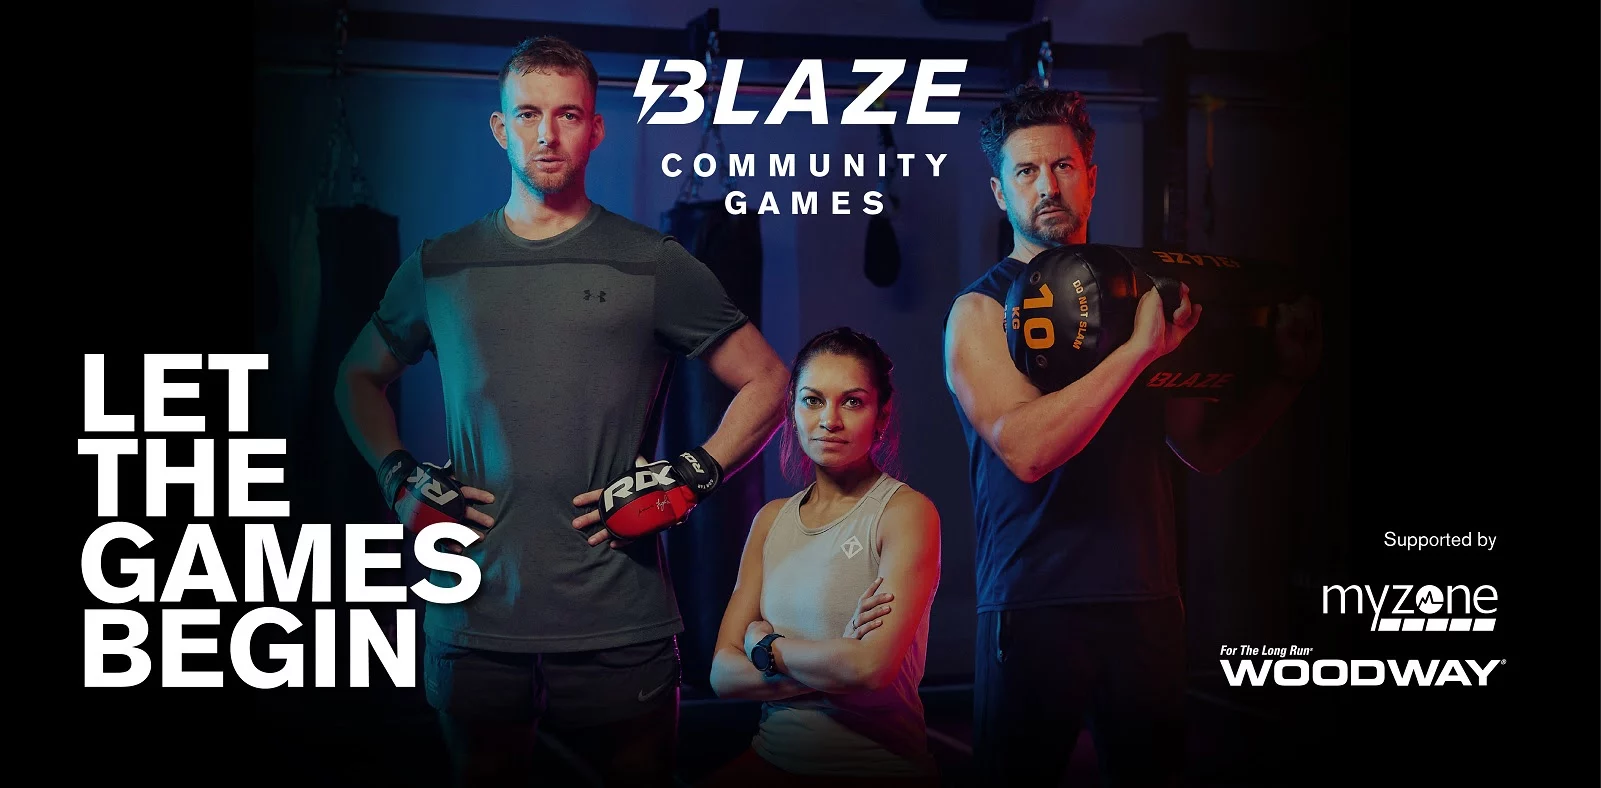 blaze games poster